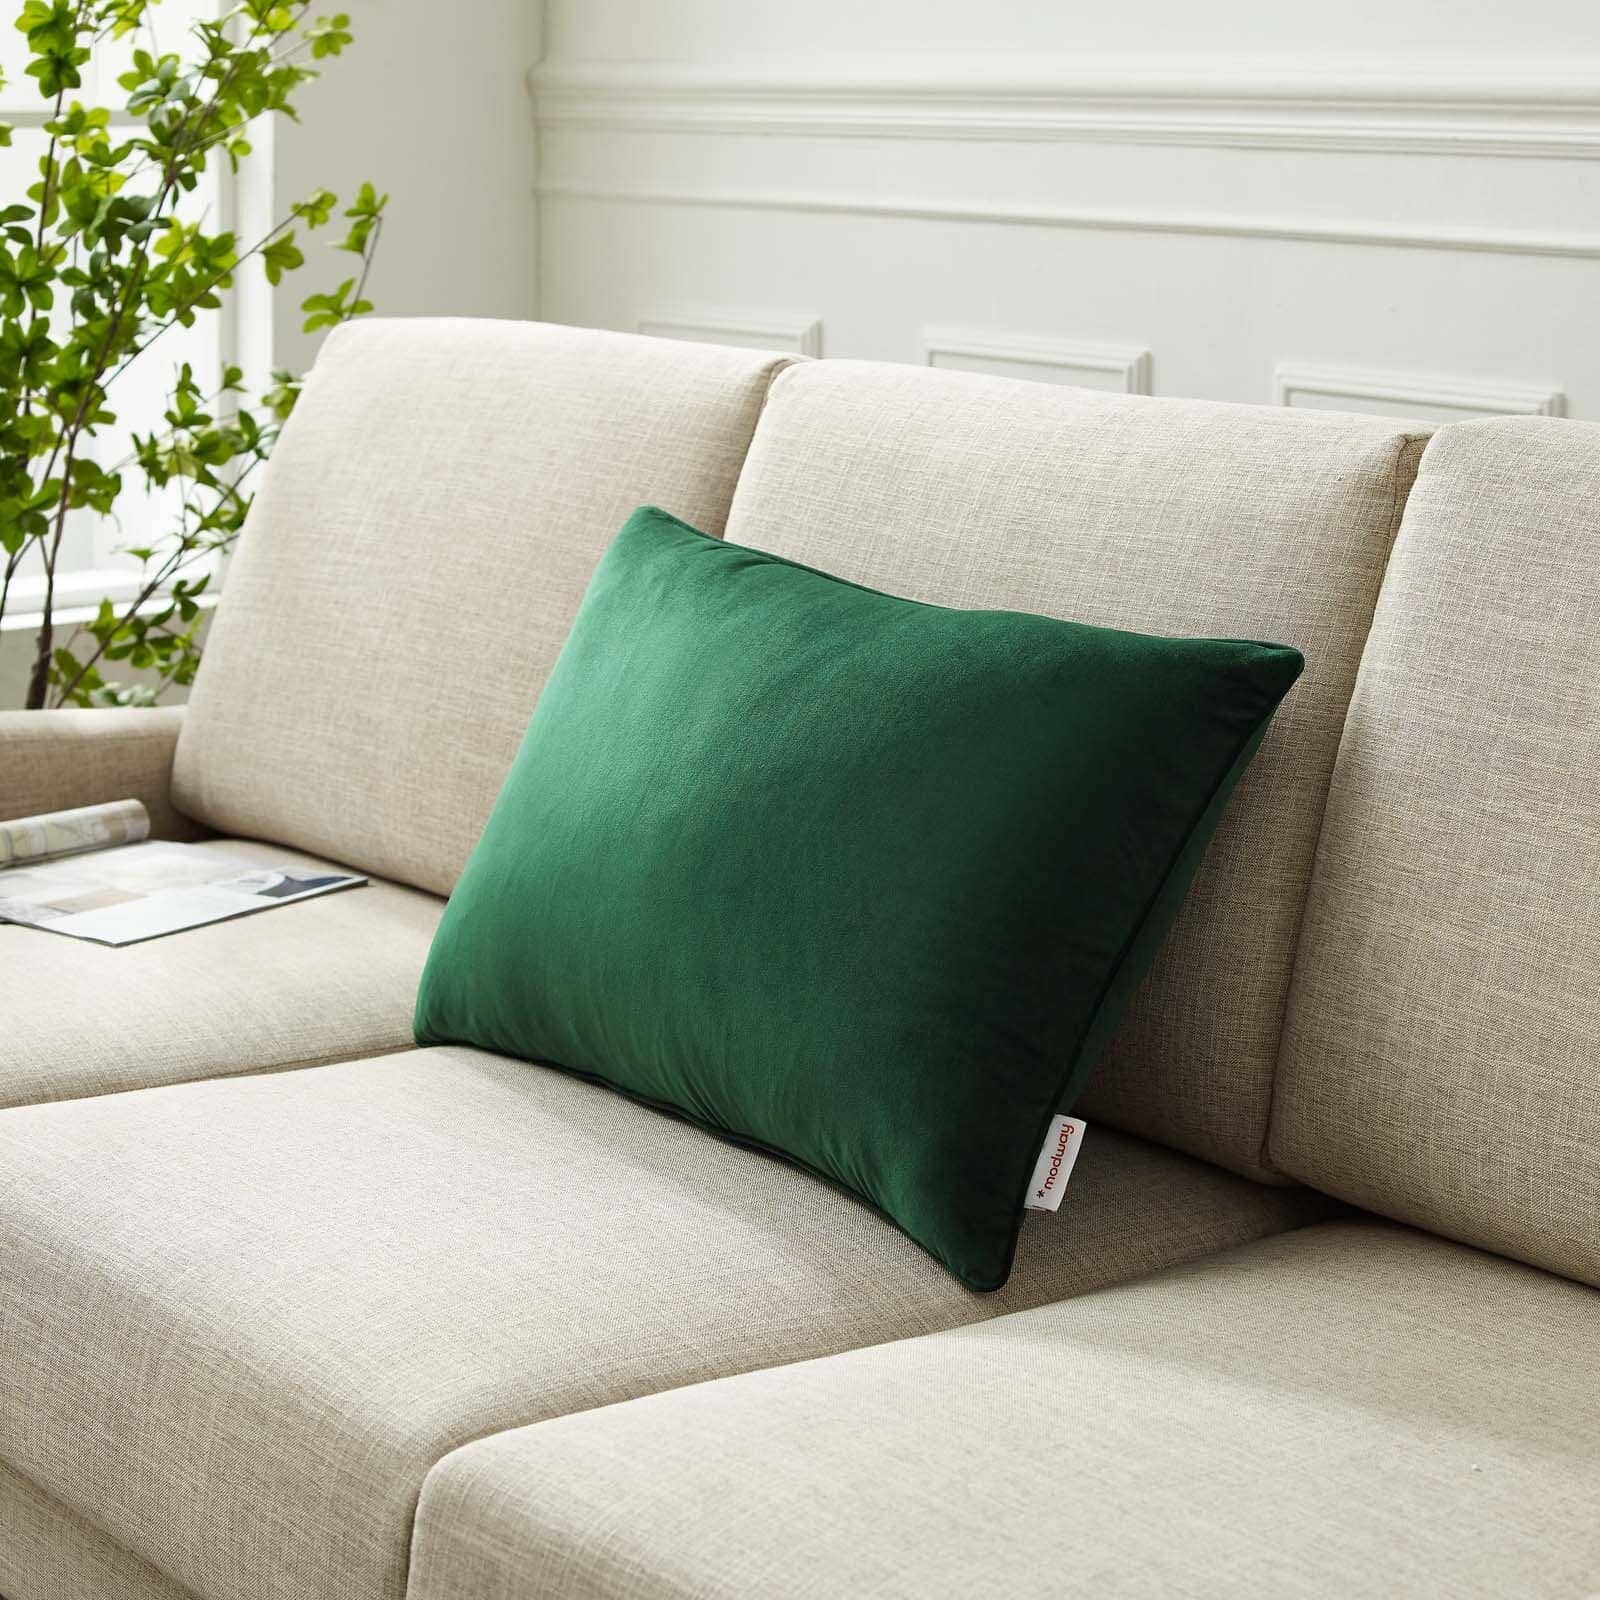 Emerald Green Throw Pillows for a Beige Sofa